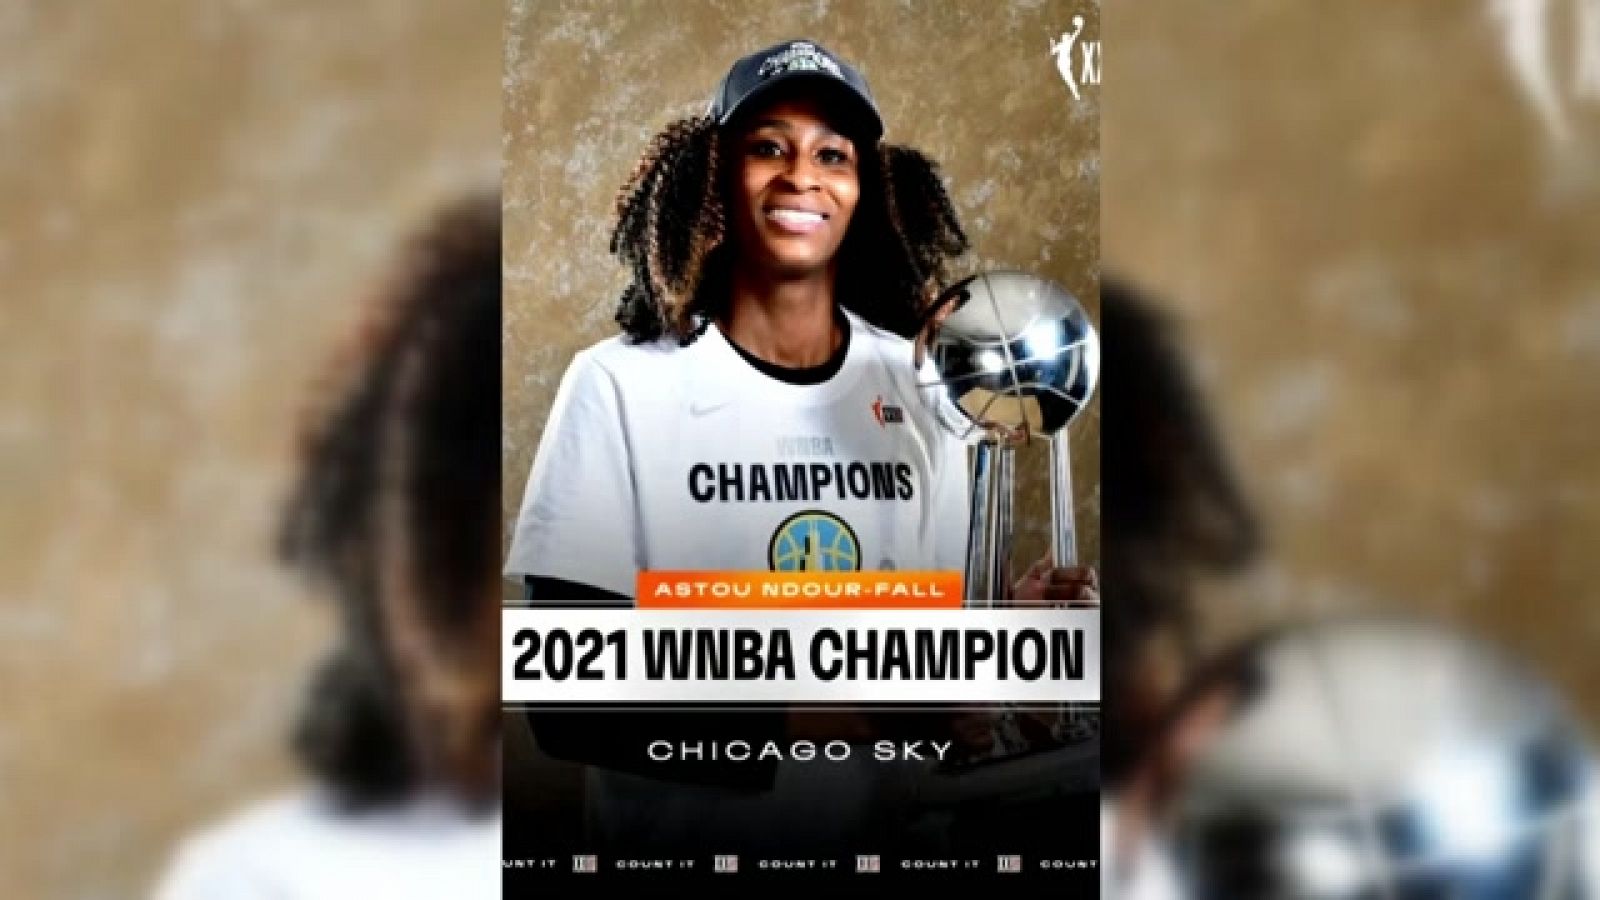 Baloncesto - WNBA Astou Ndour